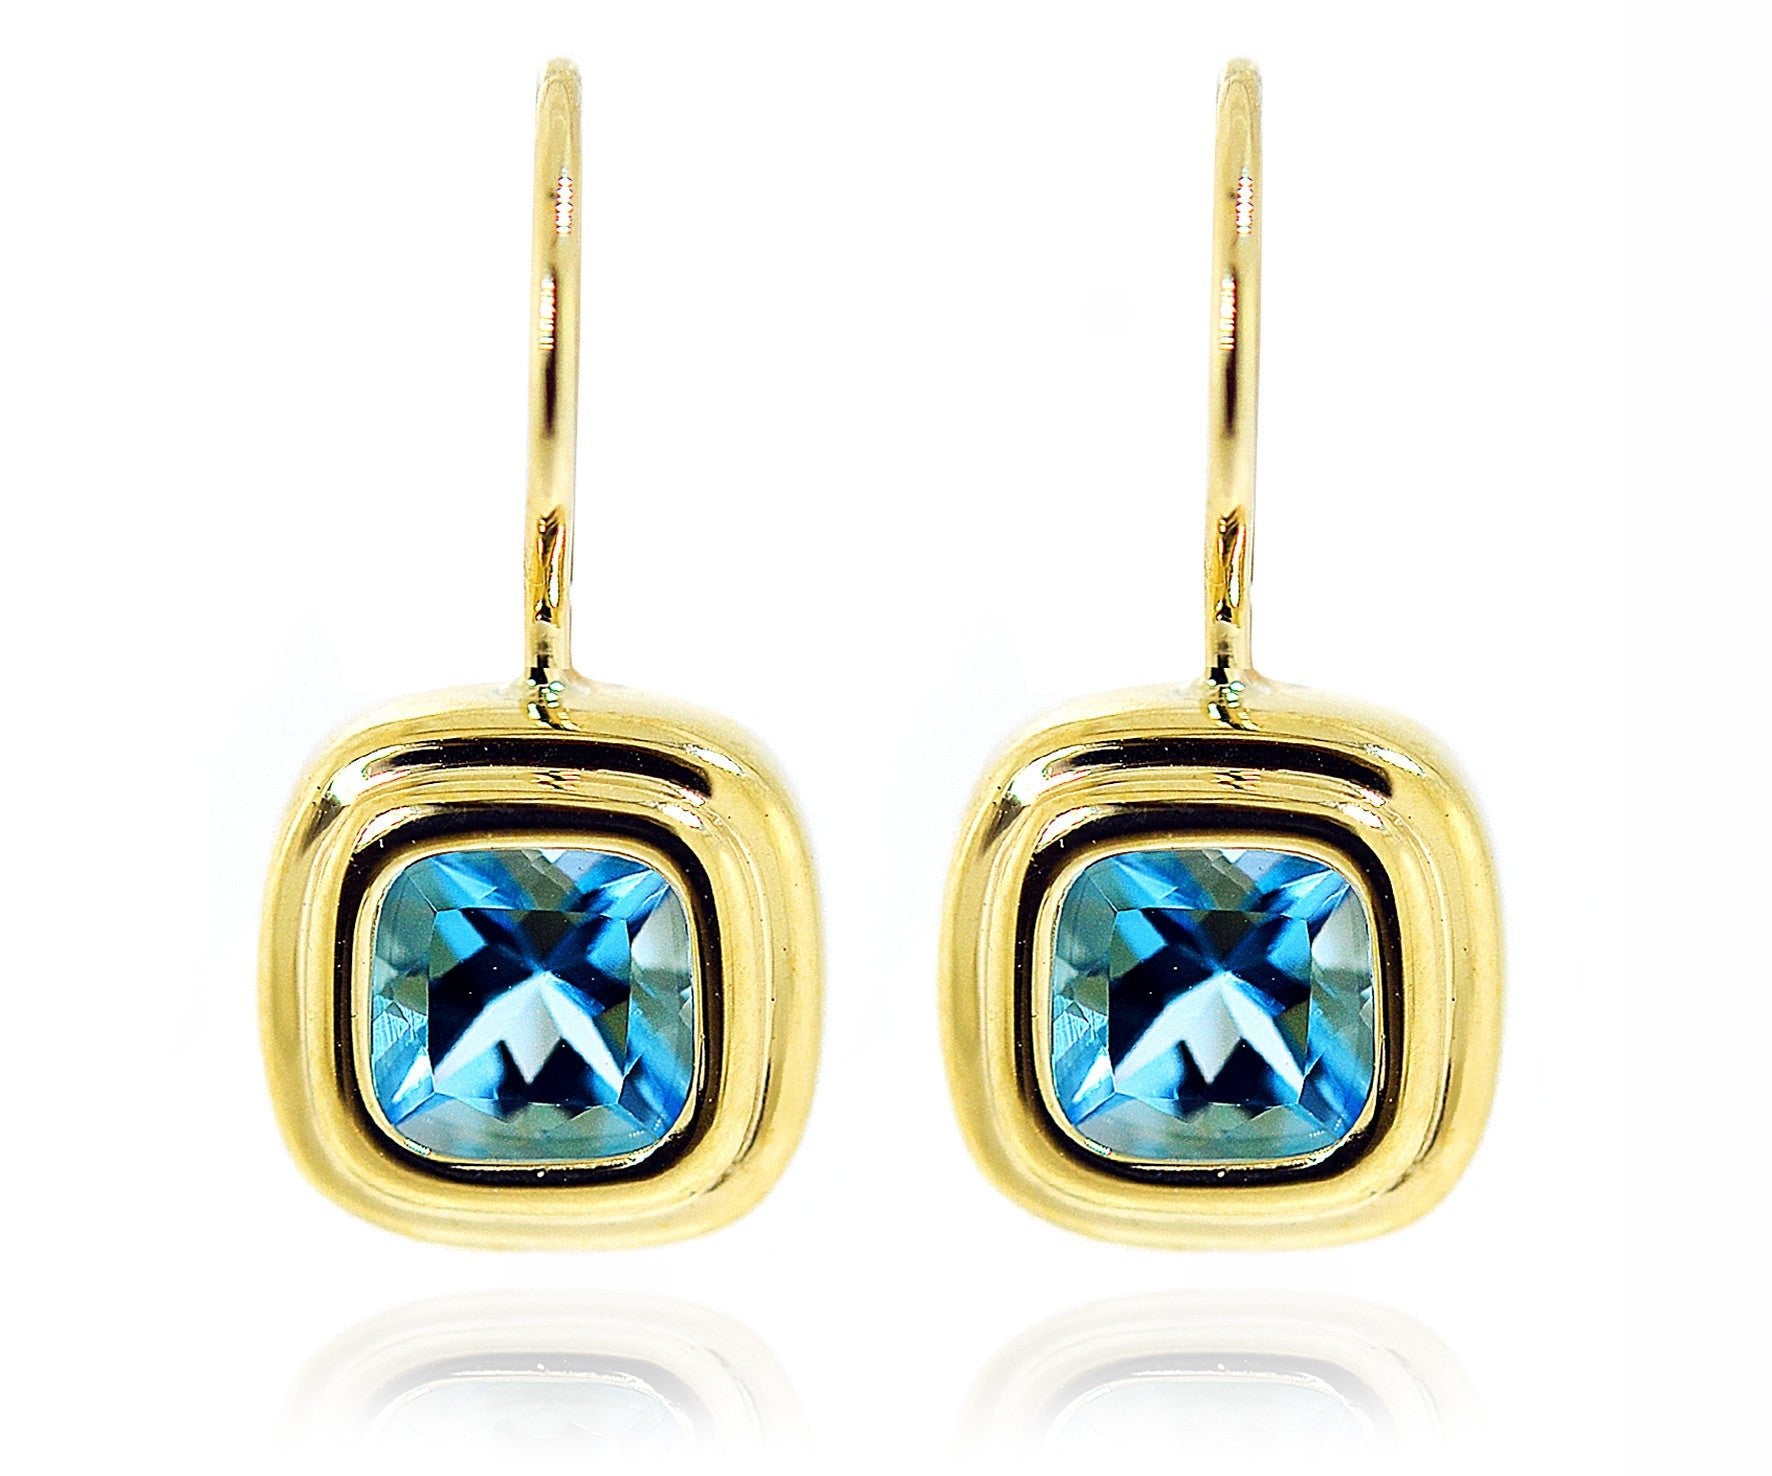 9ct Yellow gold bezel set cushion cut blue Topaz earrings - ForeverJewels Design Studio 8